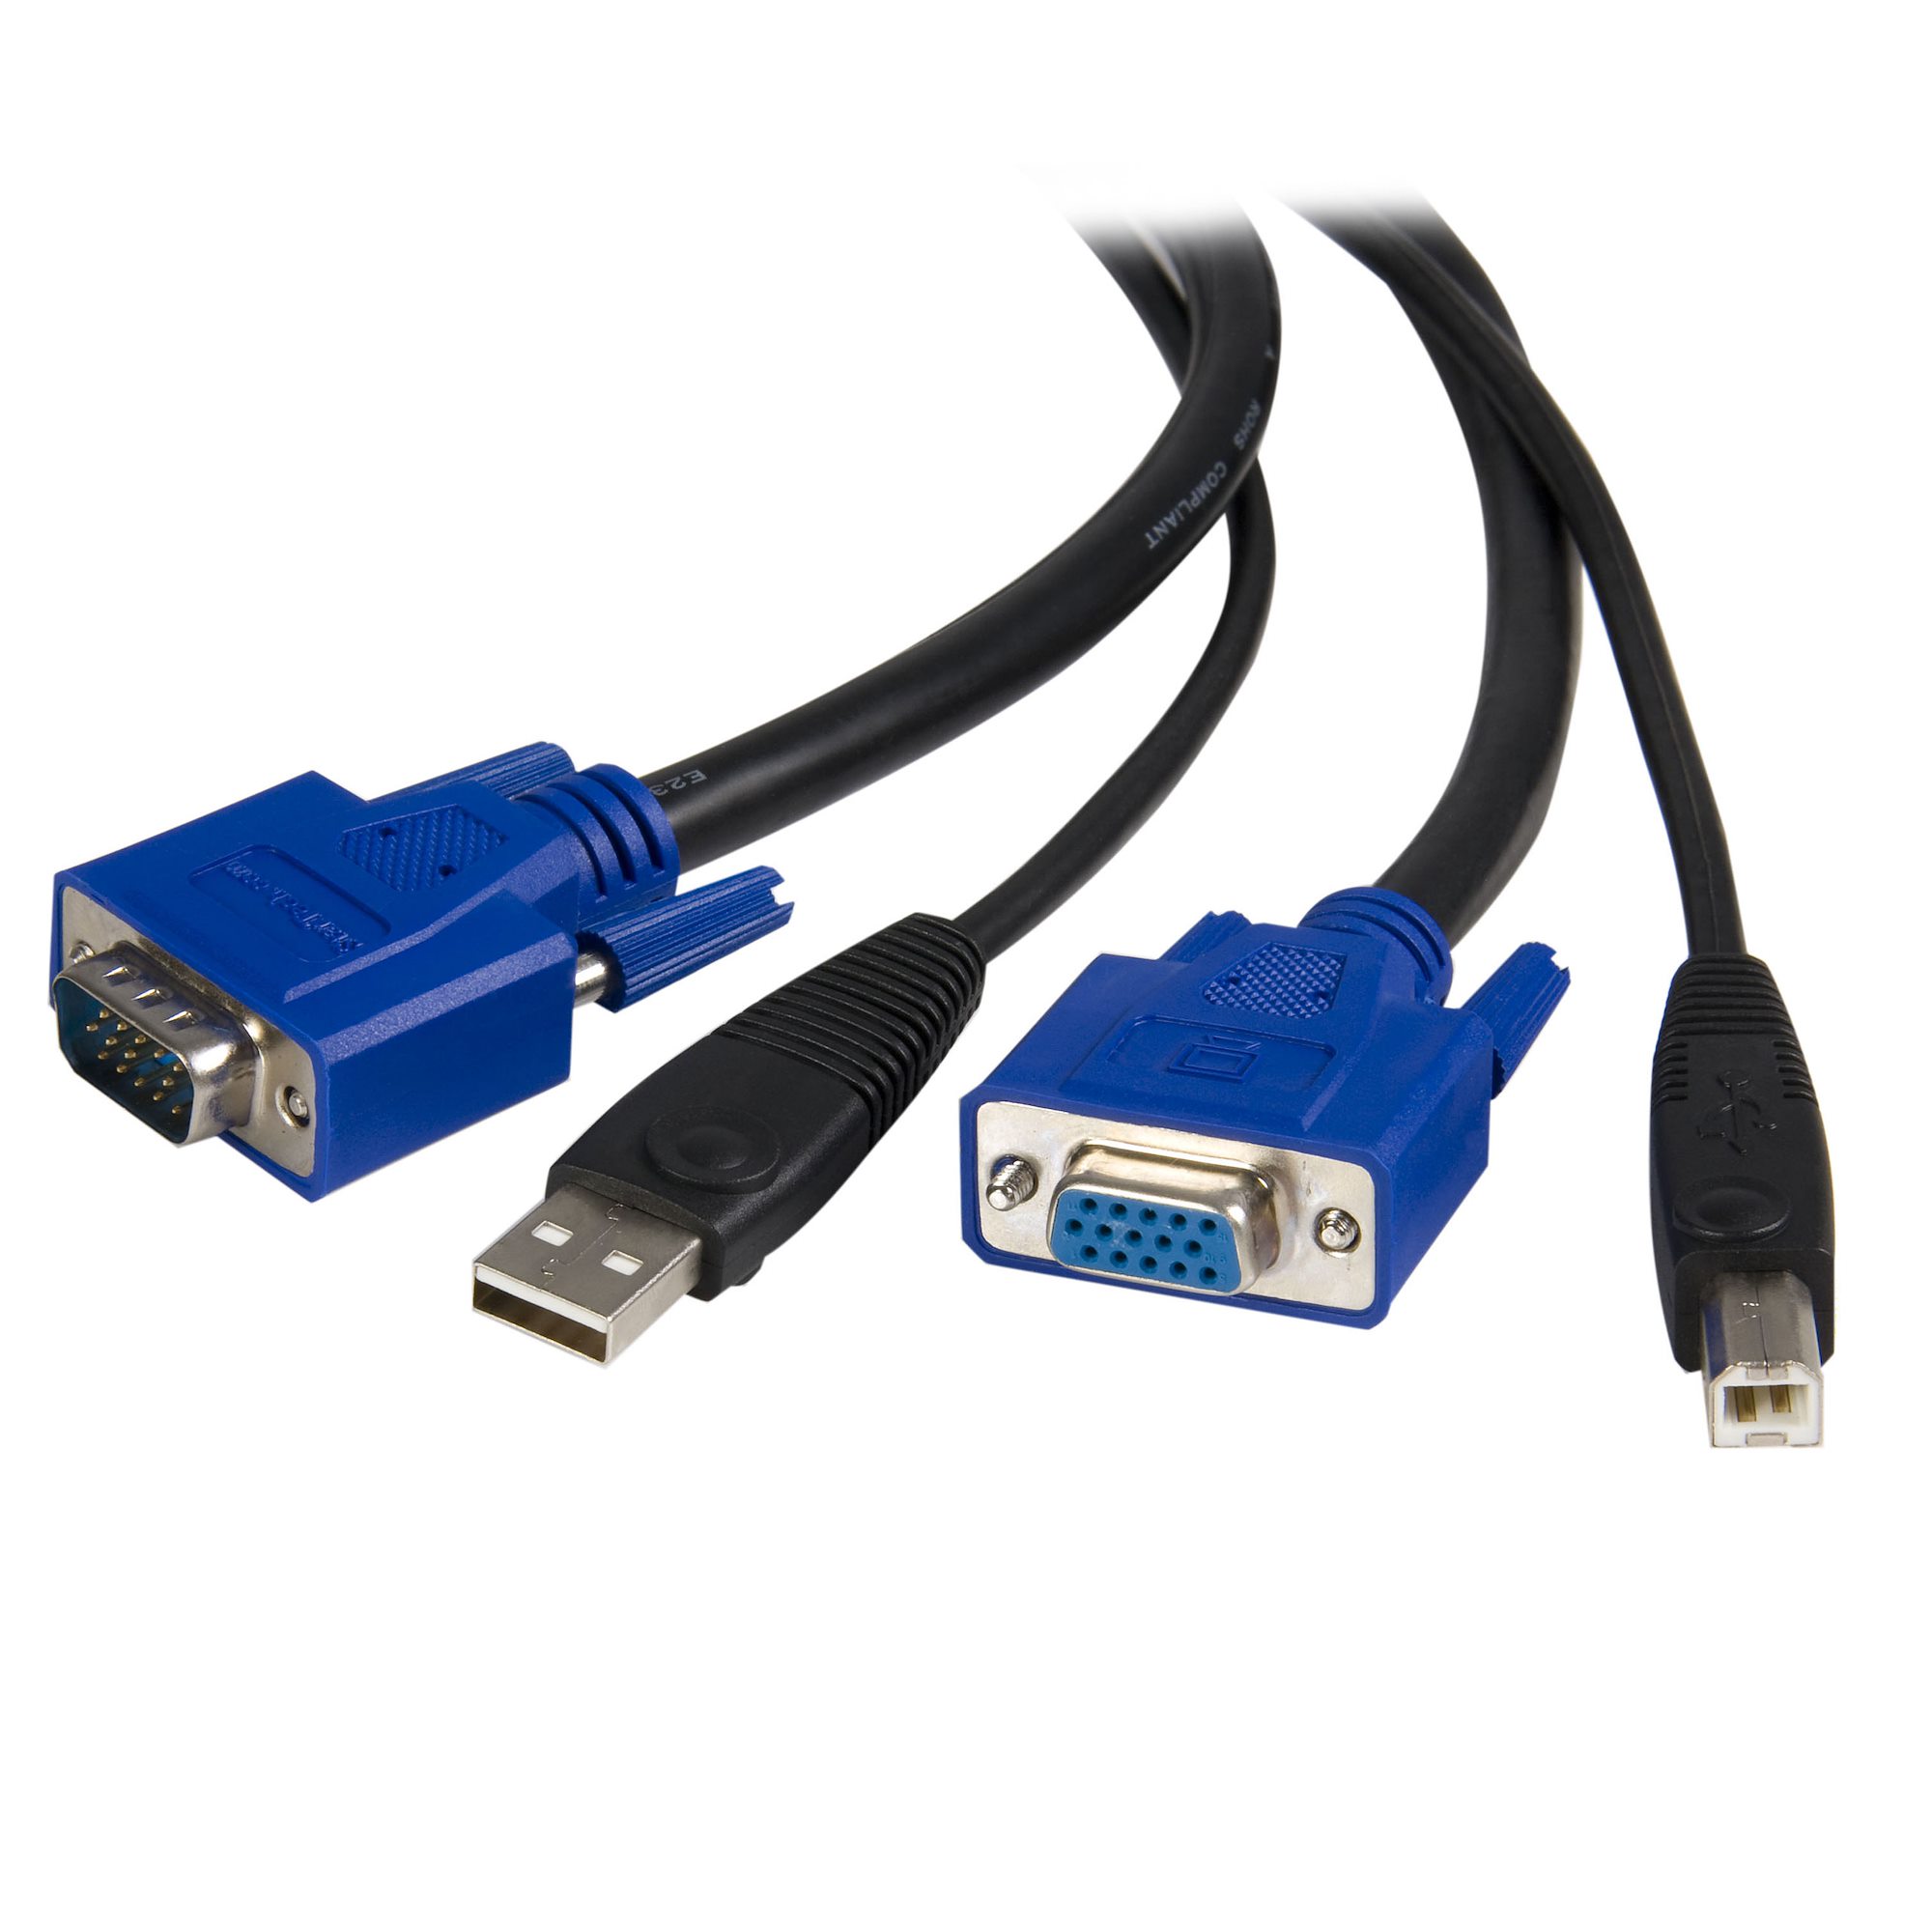 10 ft 2-in-1 Universal USB KVM Cable - KVM Cables